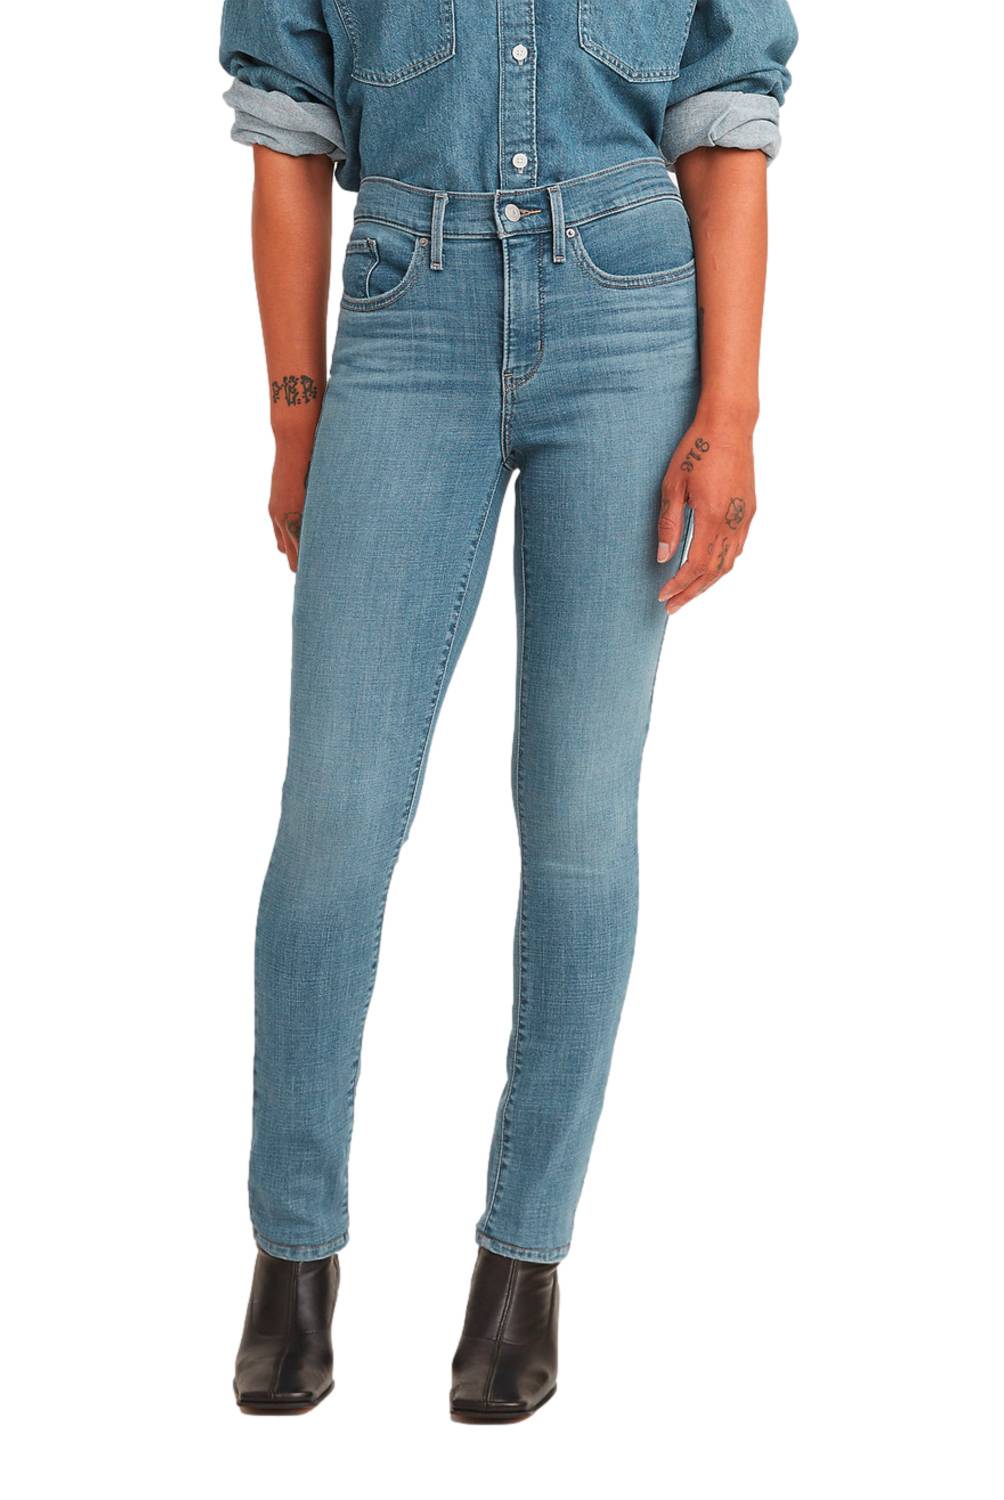 LEVIS - Levis Jeans Skinny Tiro Medio Mujer